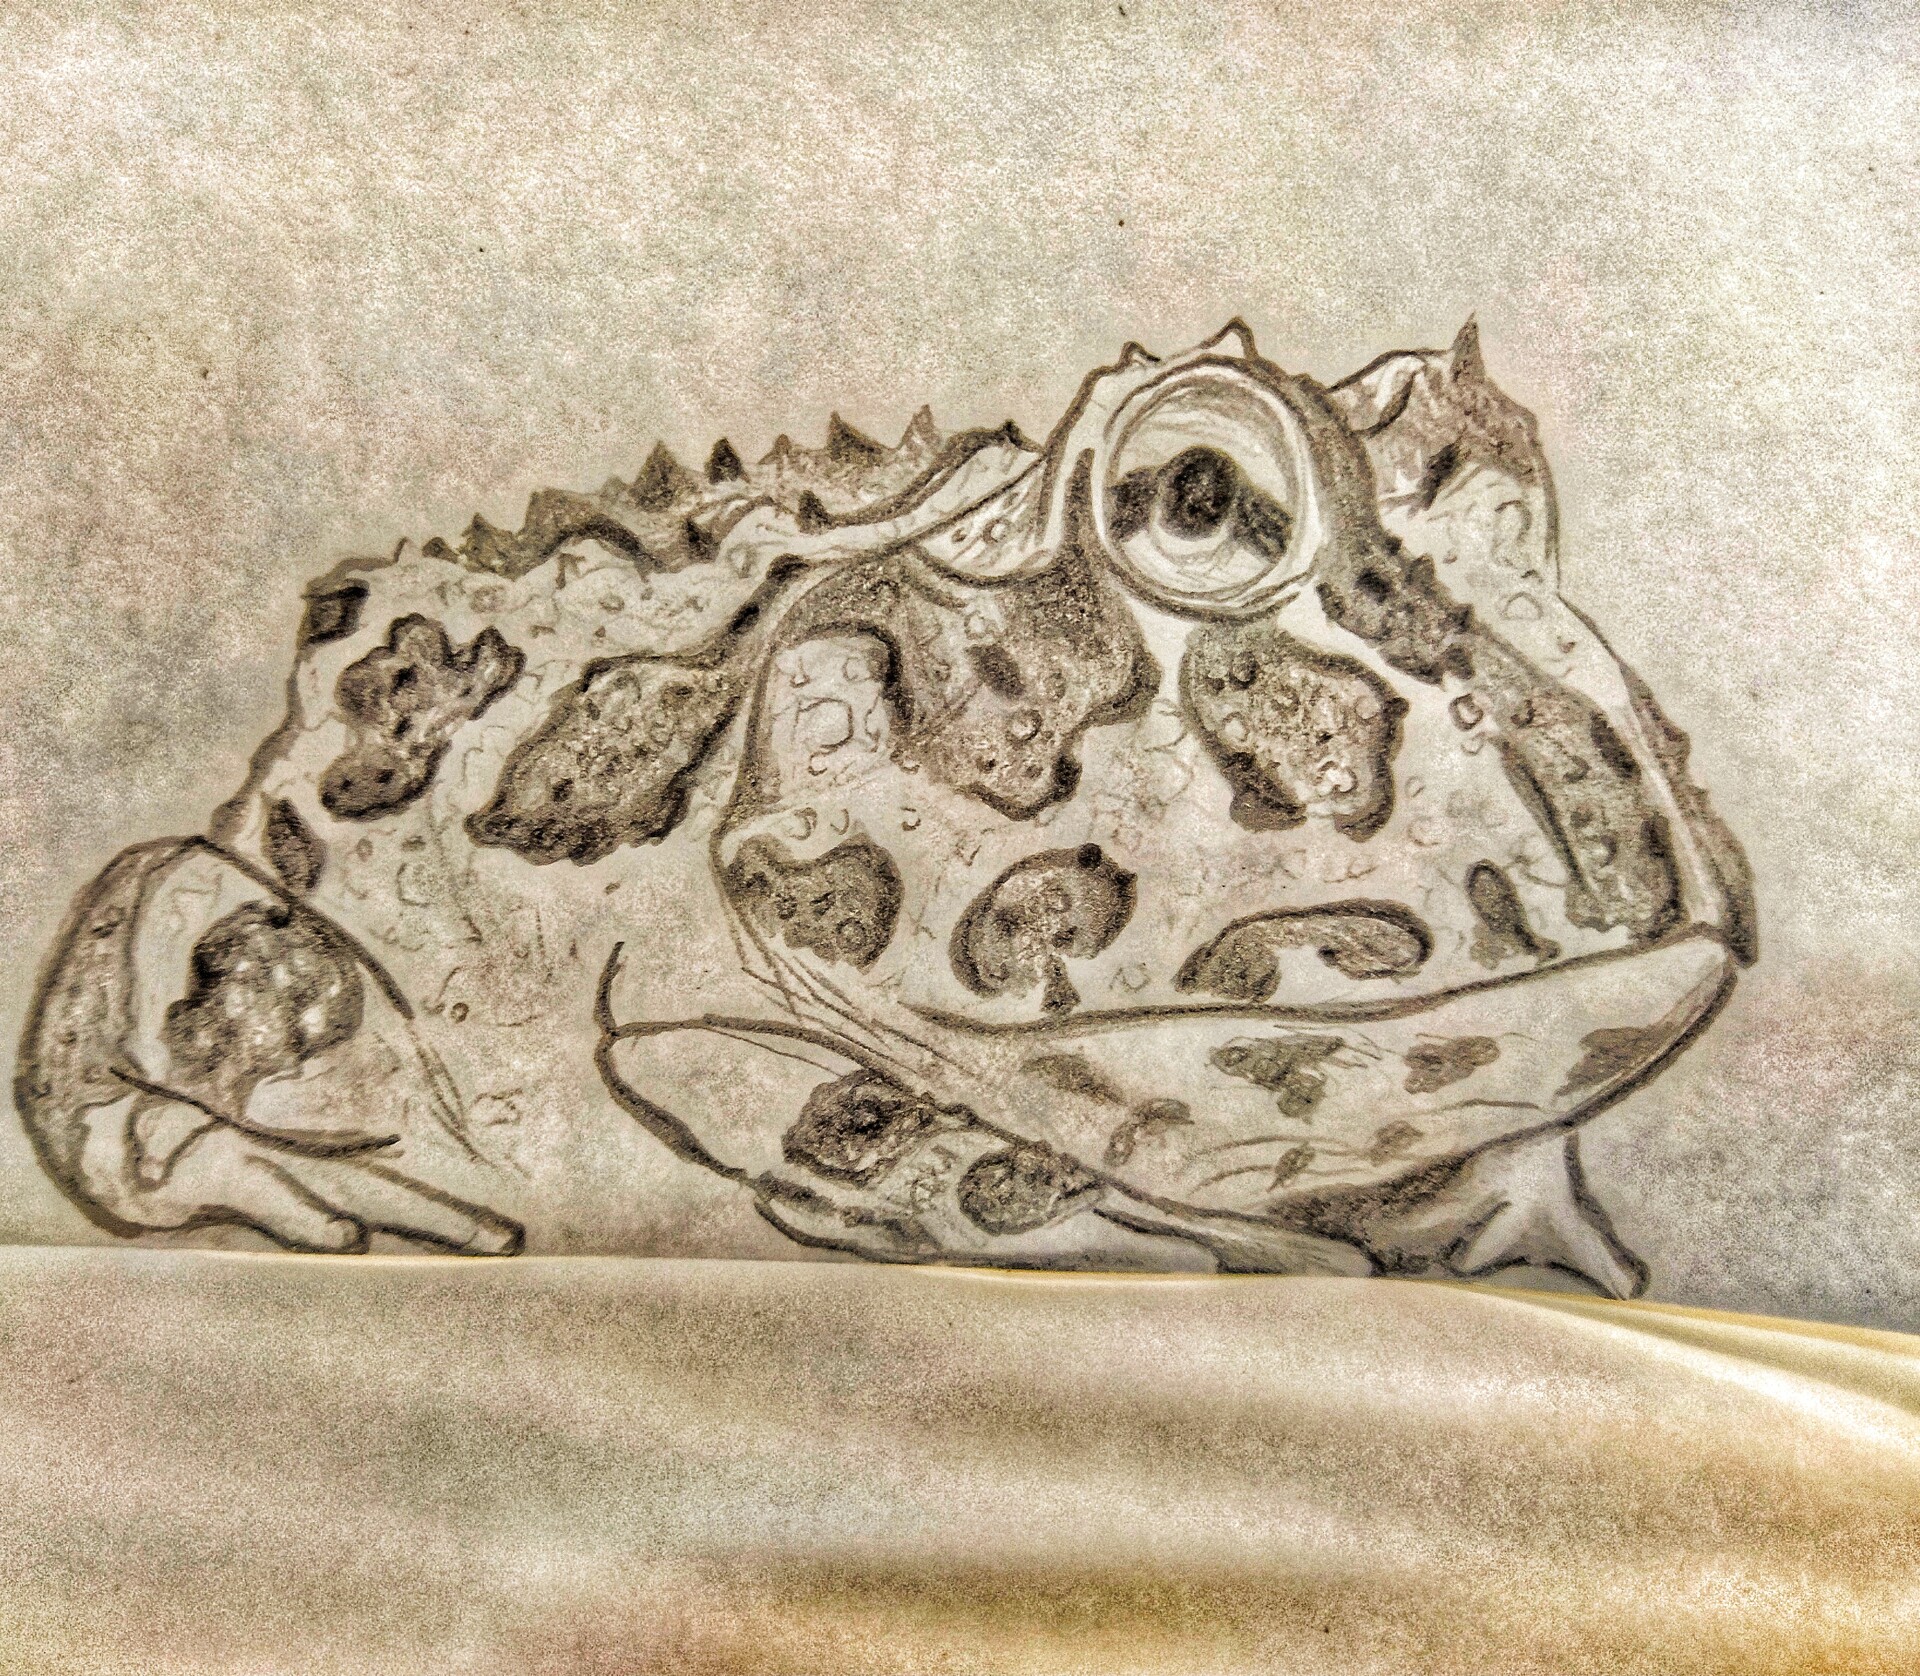 ArtStation - Tropical toad